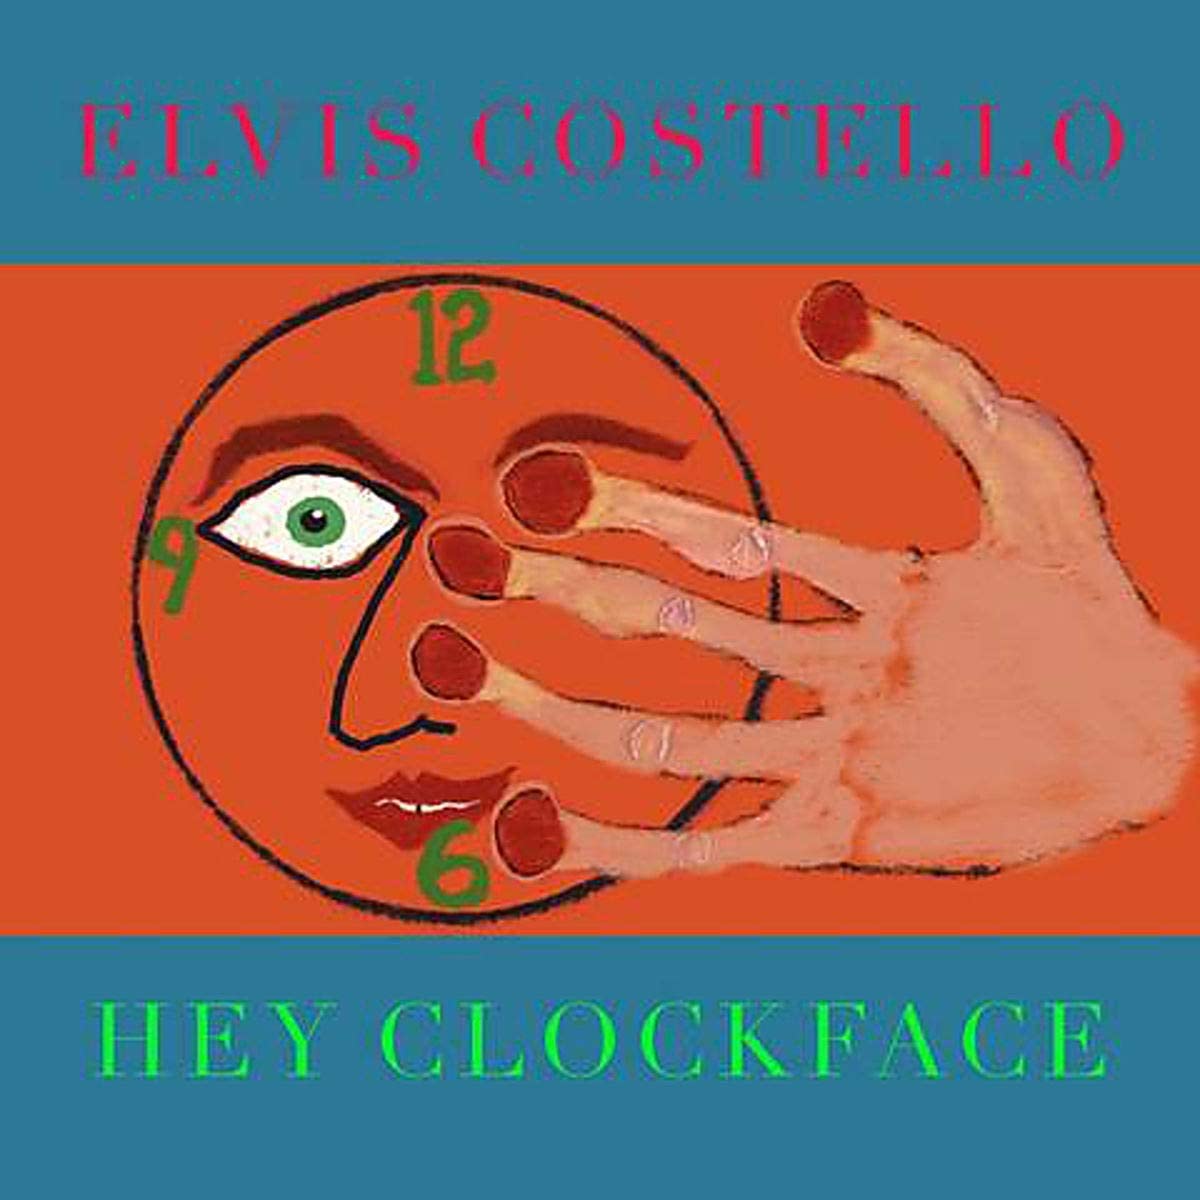 Elvis Costello - Hey Clockface - CD